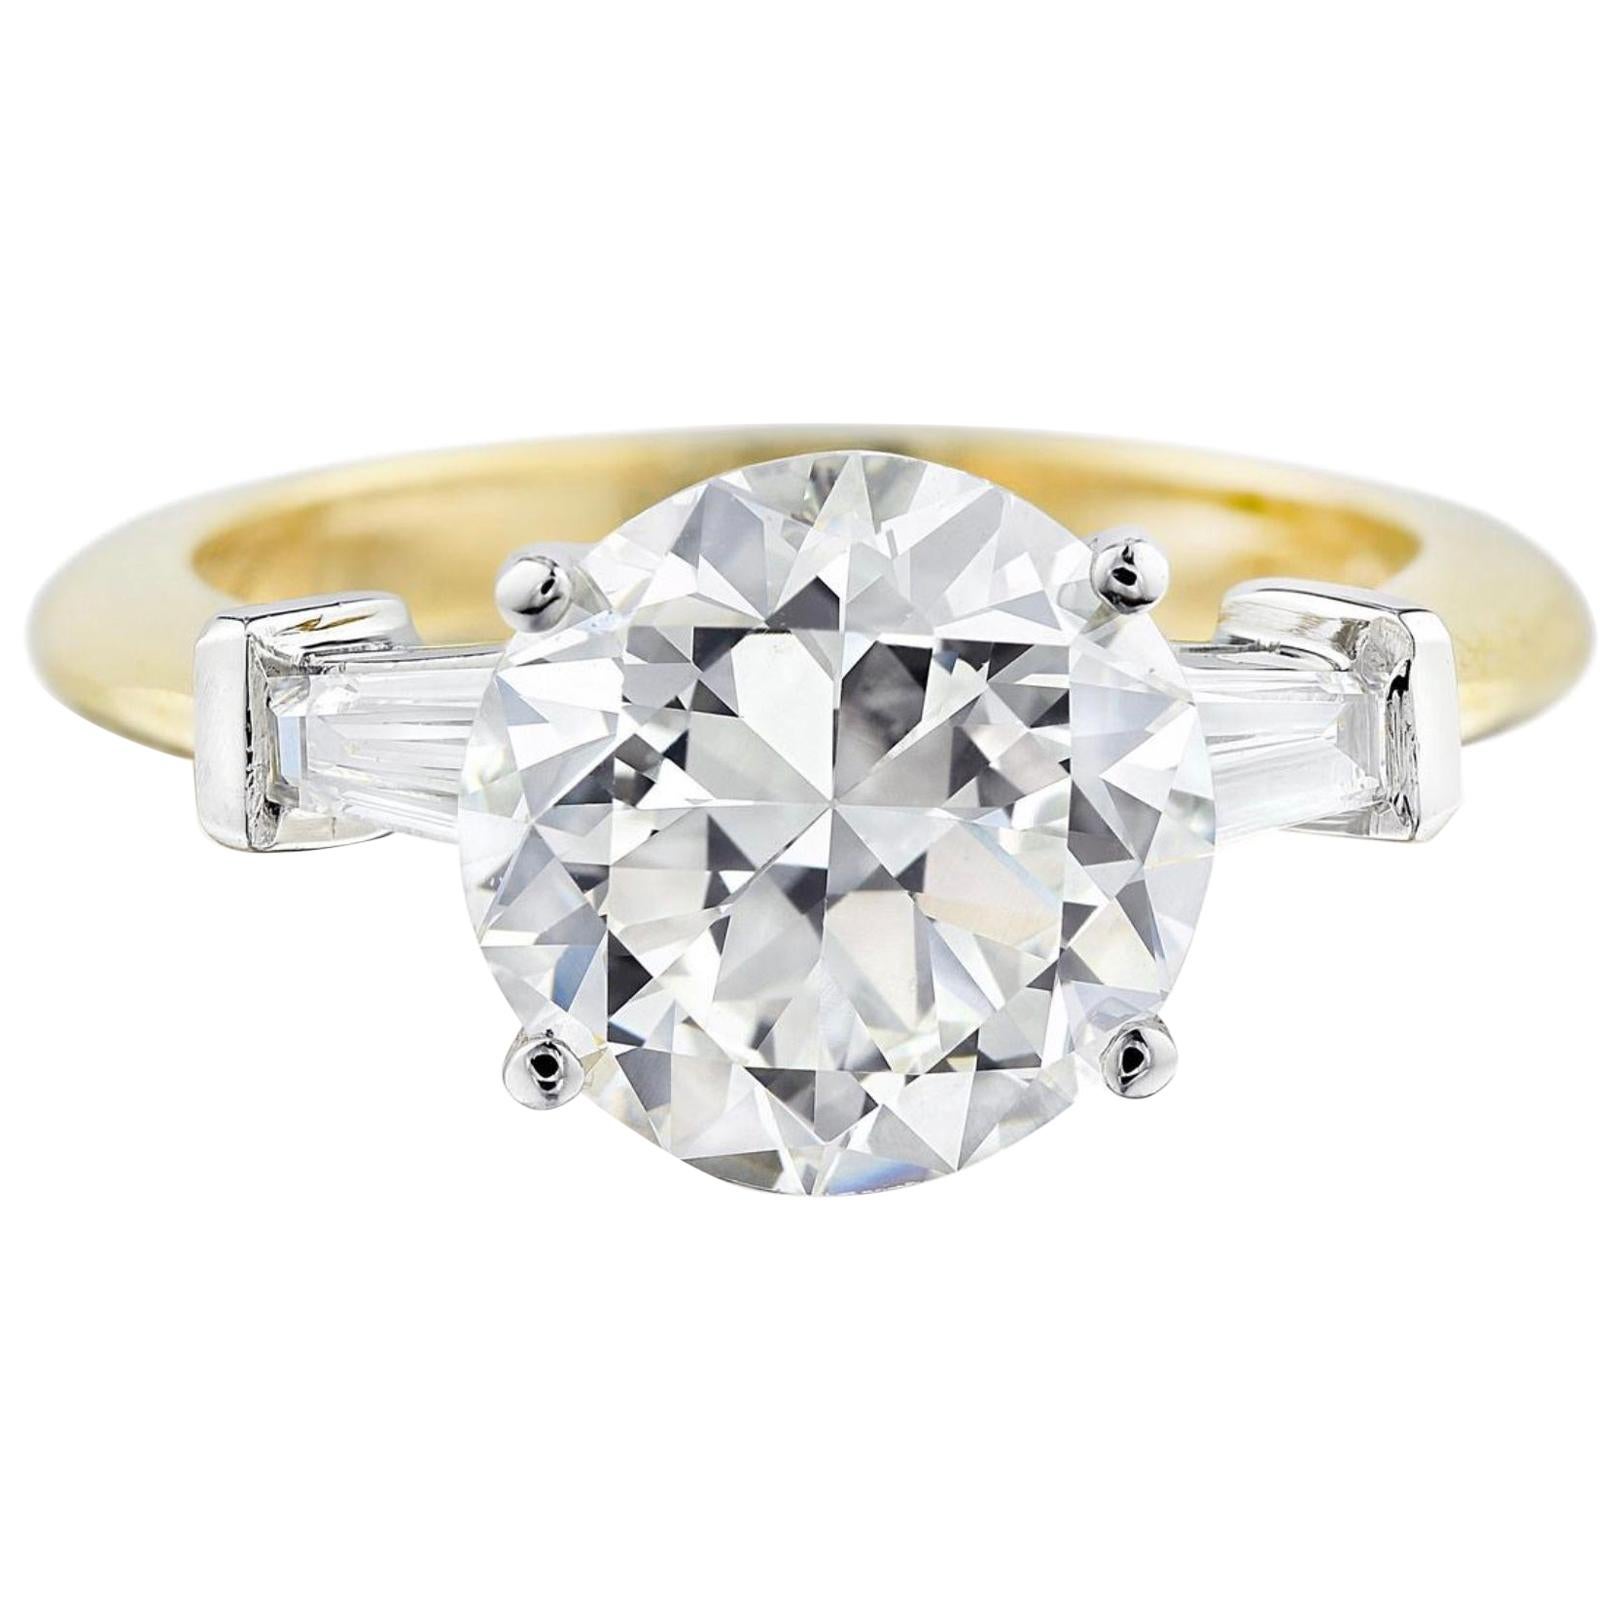 Tiffany & Co. 3.03 Carat Diamond Ring